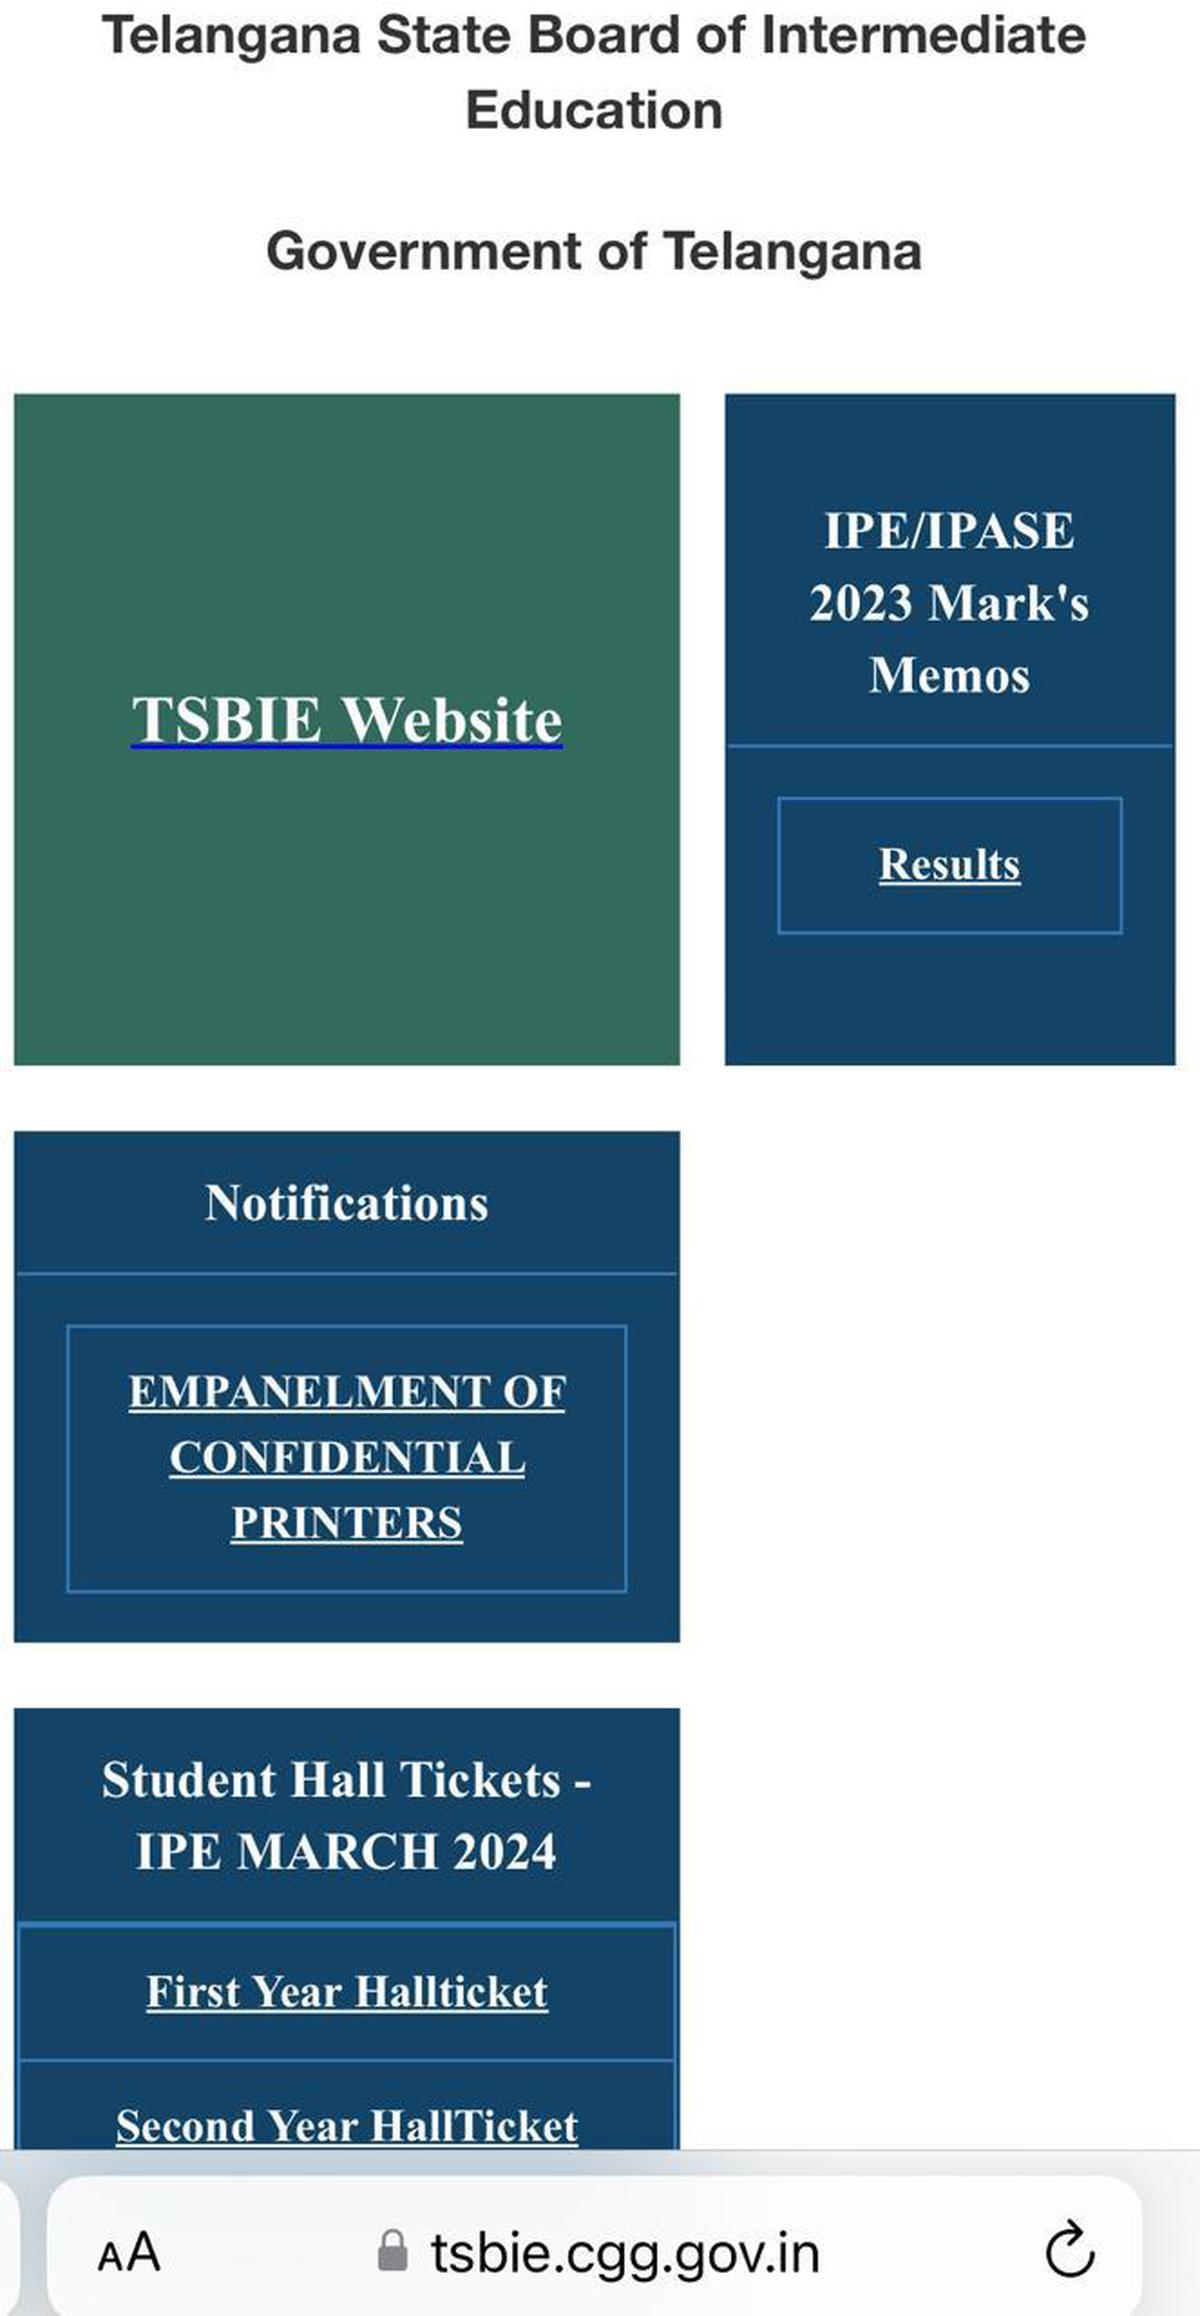 Screenshot of the website tsbie.cgg.gov.in taken on February 26, 2024.